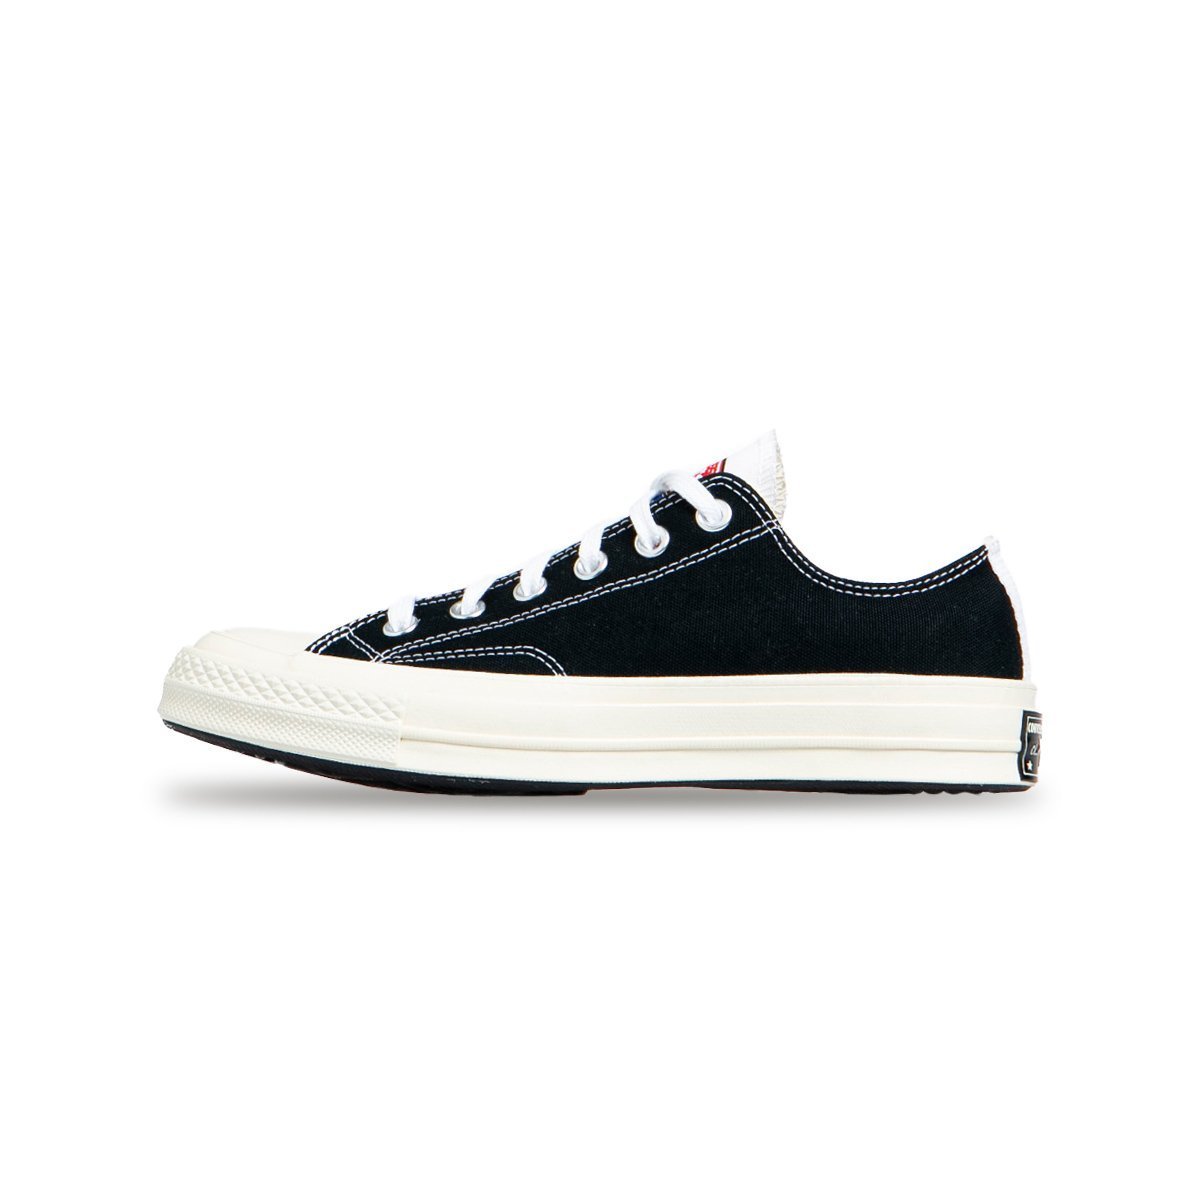 Sneakers WMNS Converse Chuck 70 OX white/black/desert ore (166749C) |  Bludshop.com